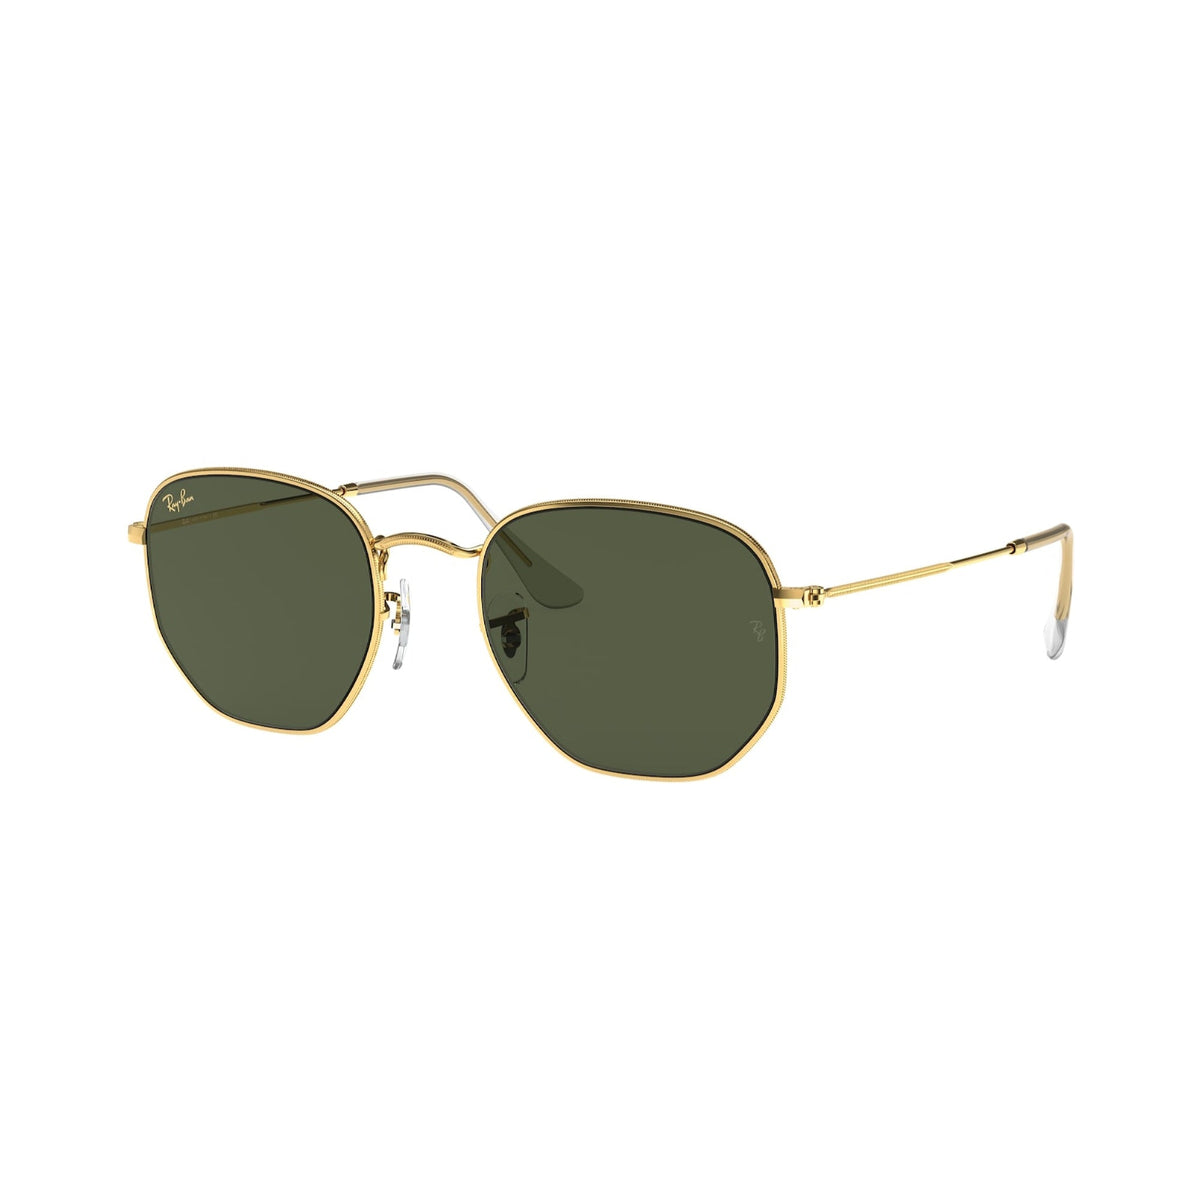 Ray-Ban Unisex Sunglasses Hexagonal Gold G-15 Green Metal Metal  0RB3548 919631 48